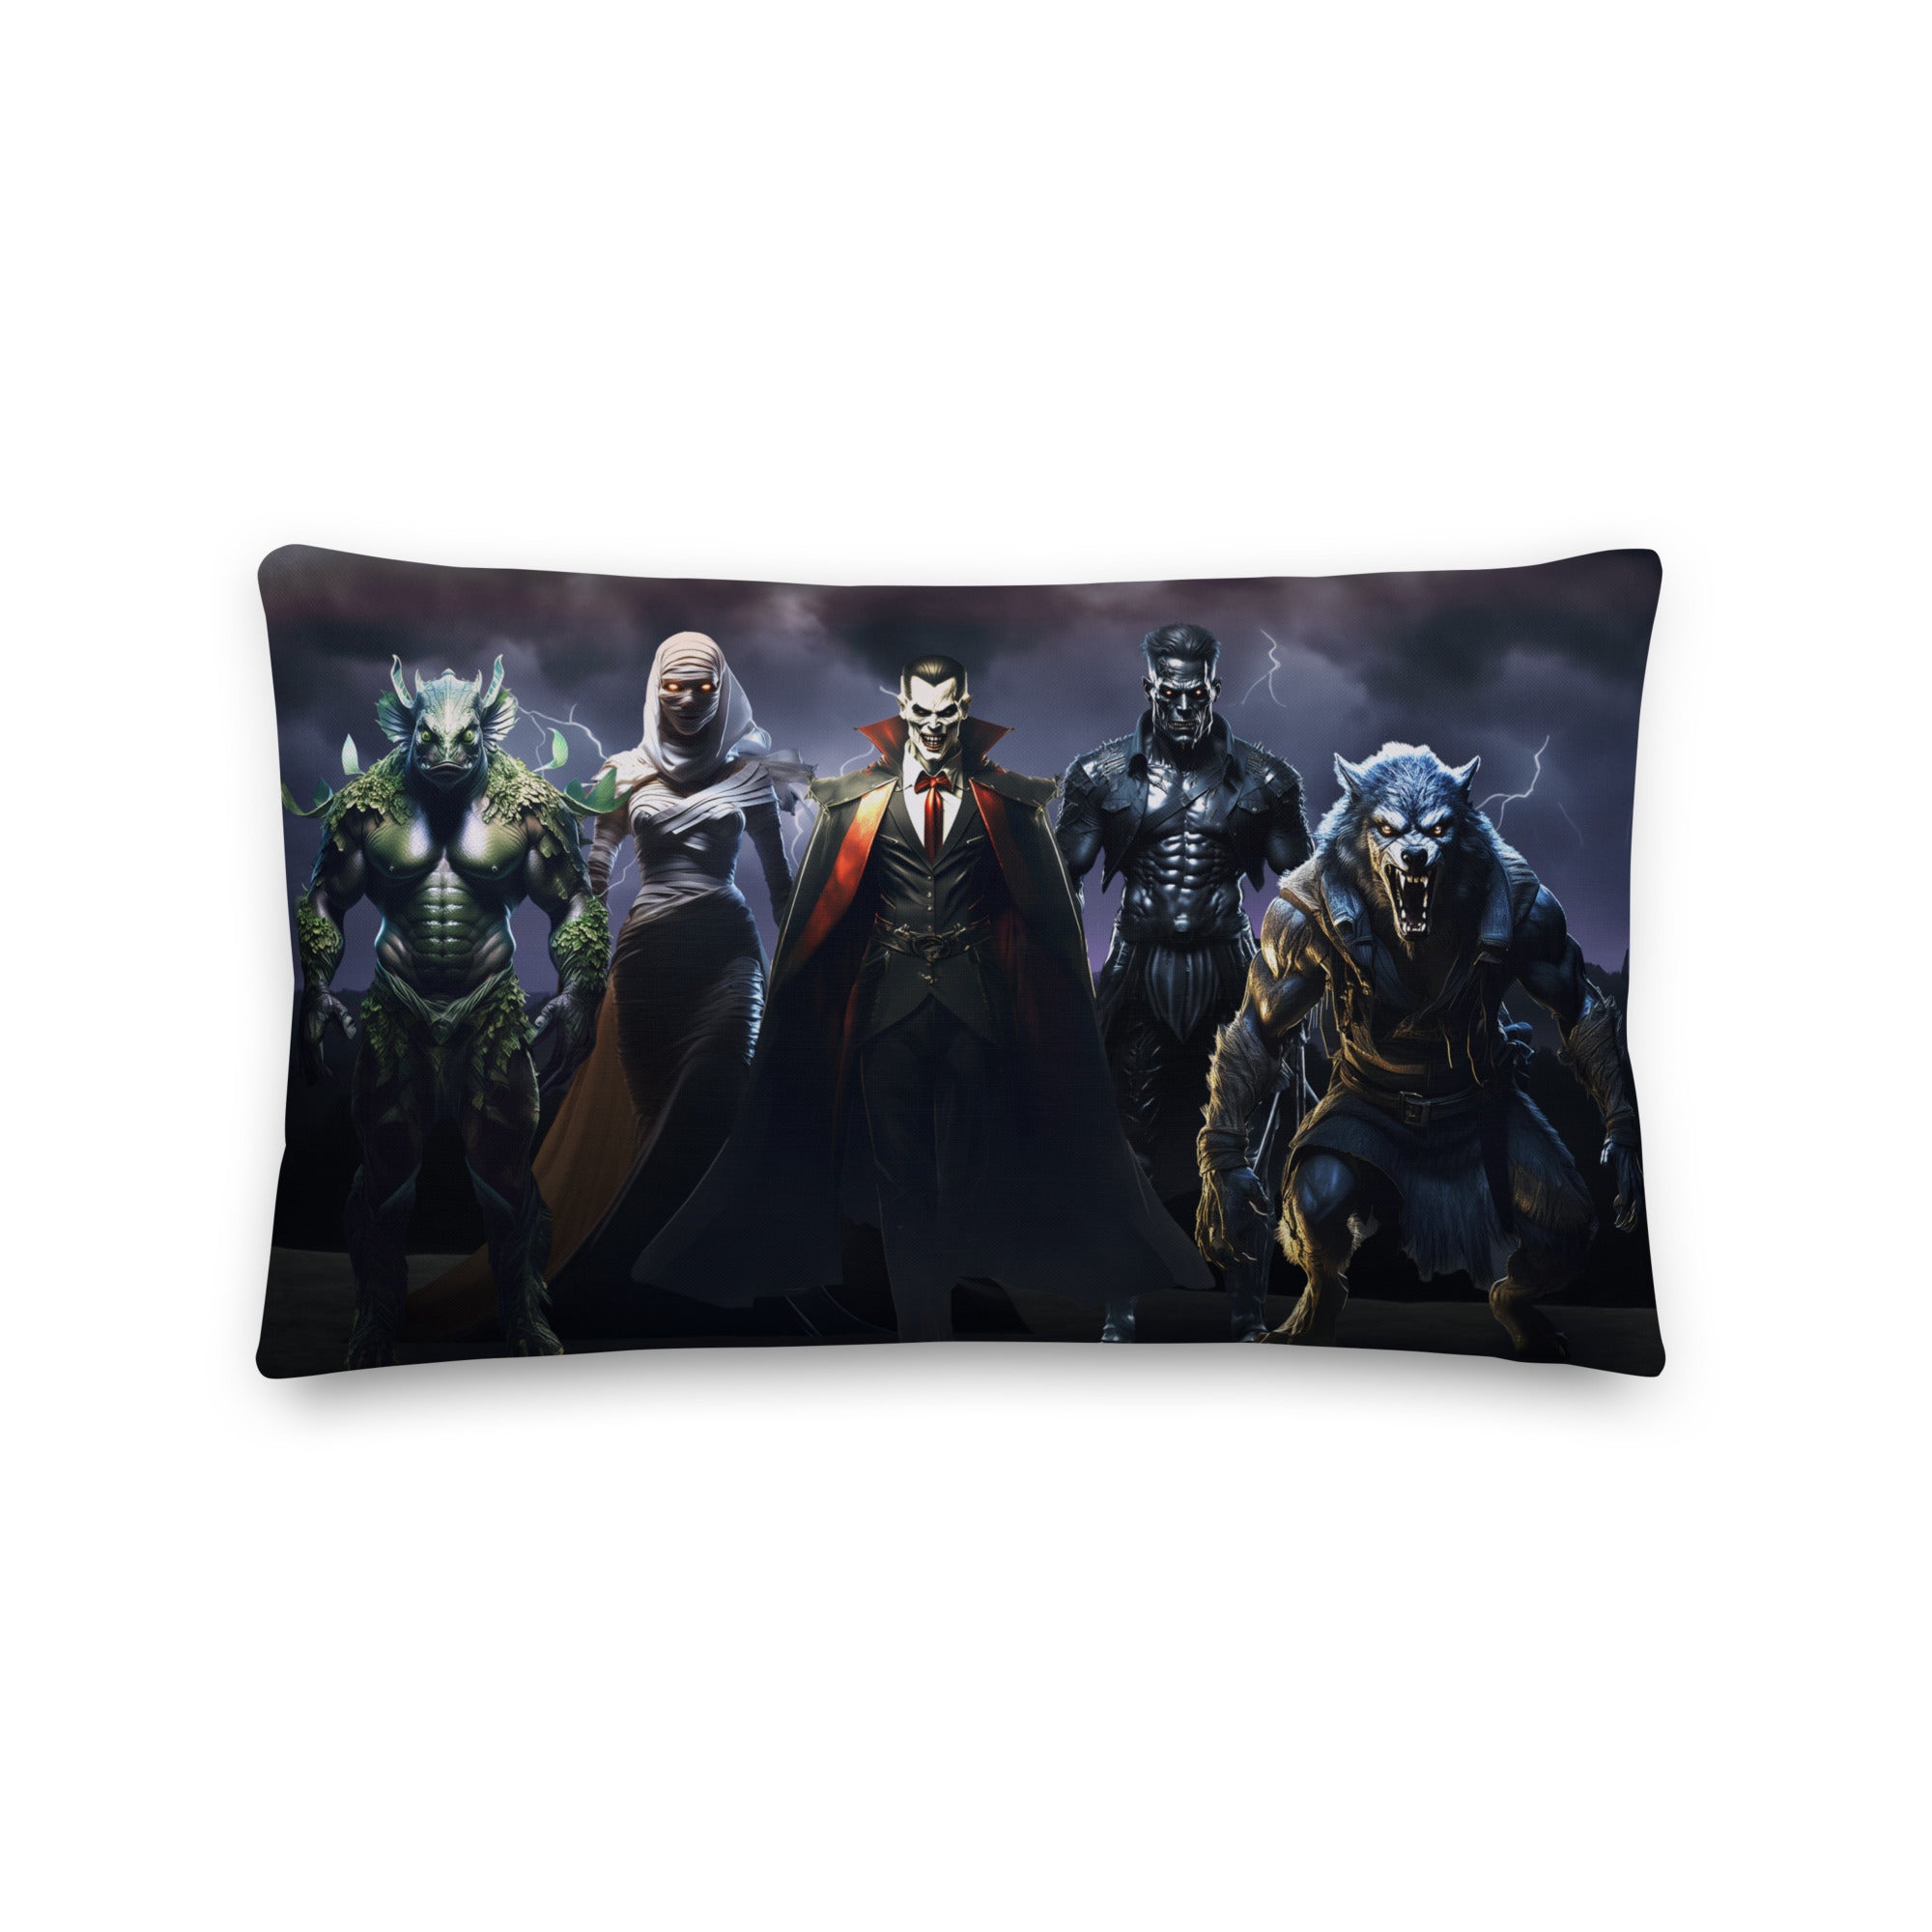 The Monster Squad Premium Pillow